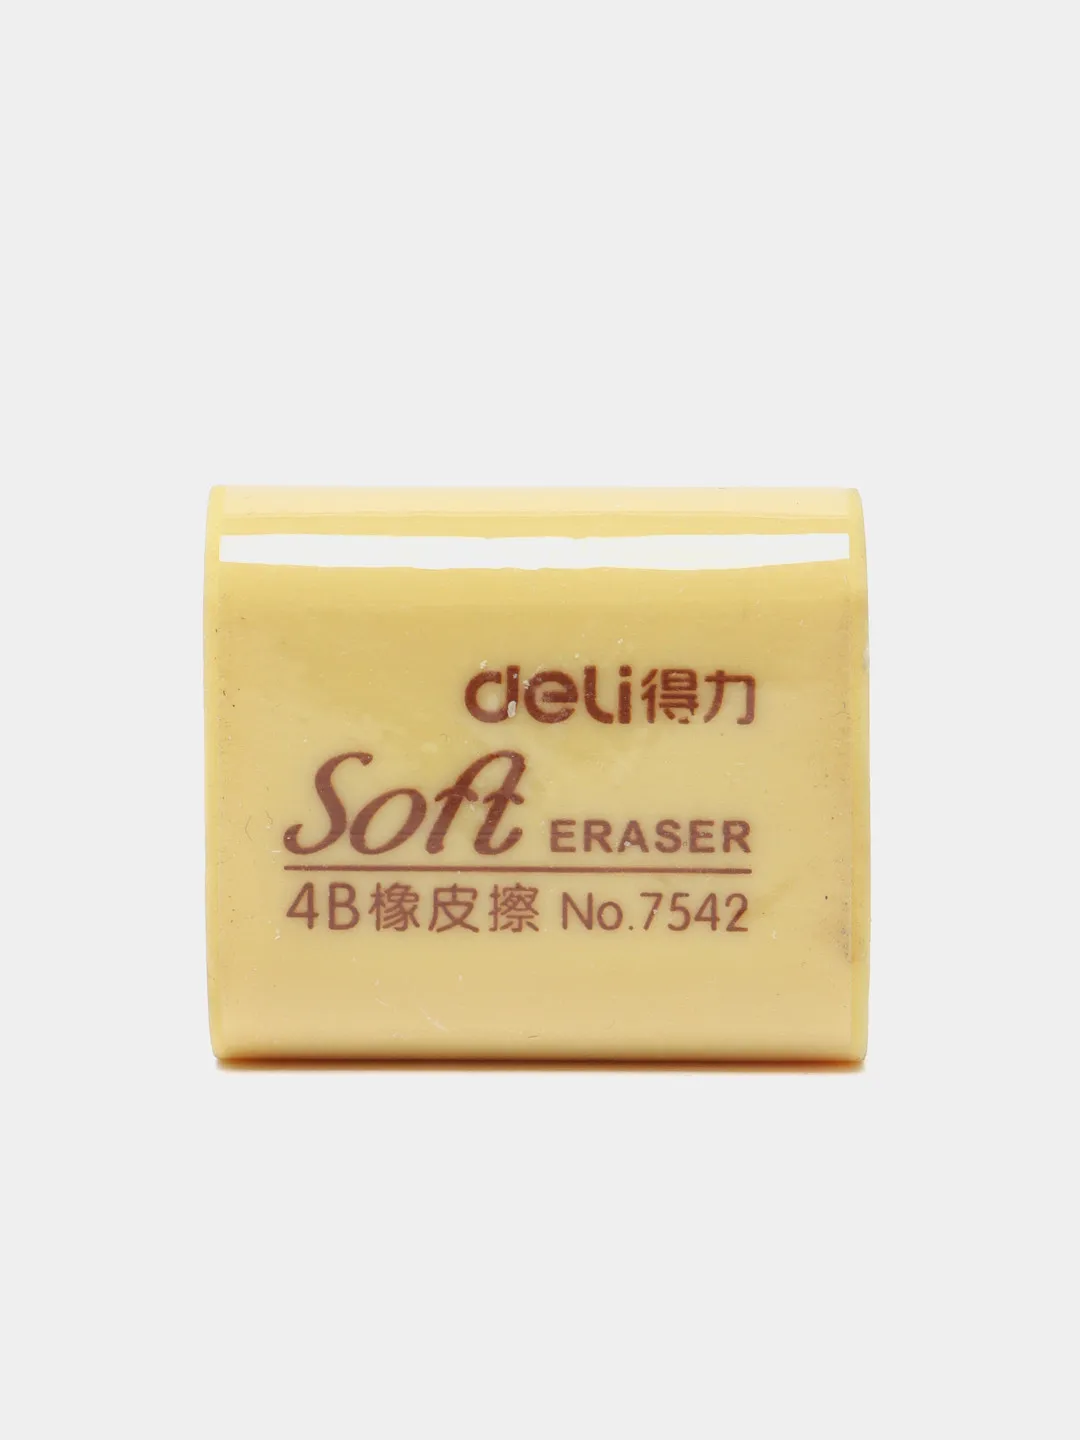 Eraser 7542 Deli#1